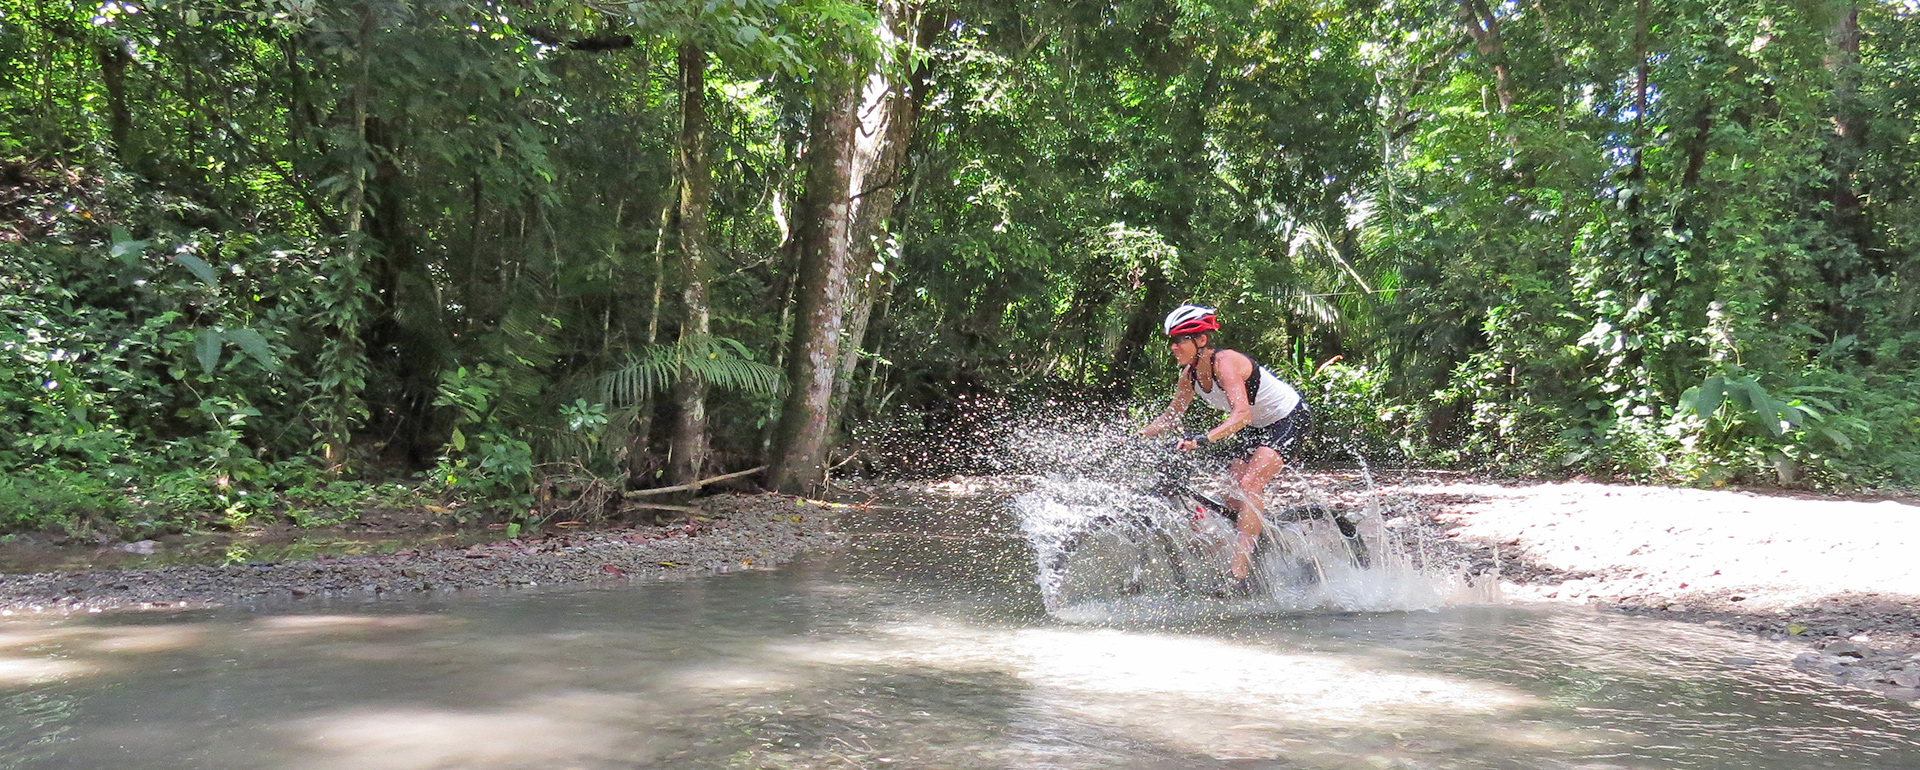 Costa Rica Bike Adventure in den Nationalparks